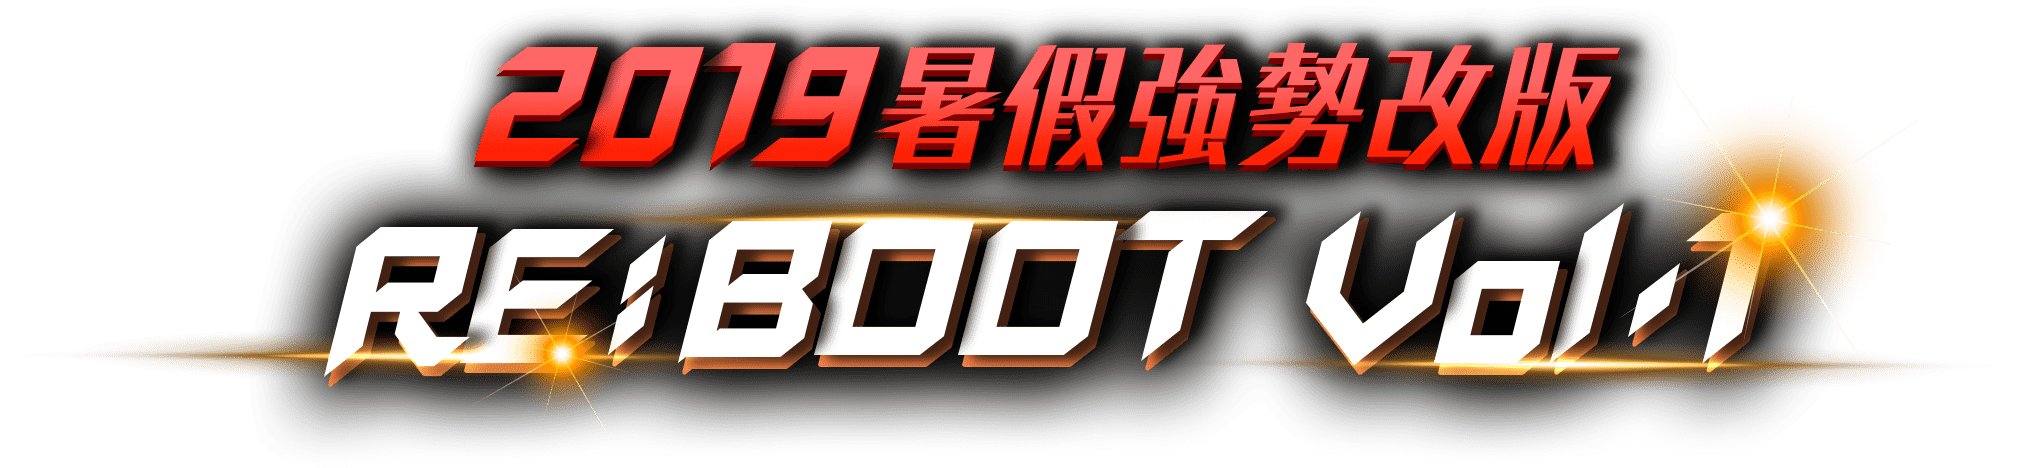 2019暑假強勢改版 RE:BOOT Vol.1